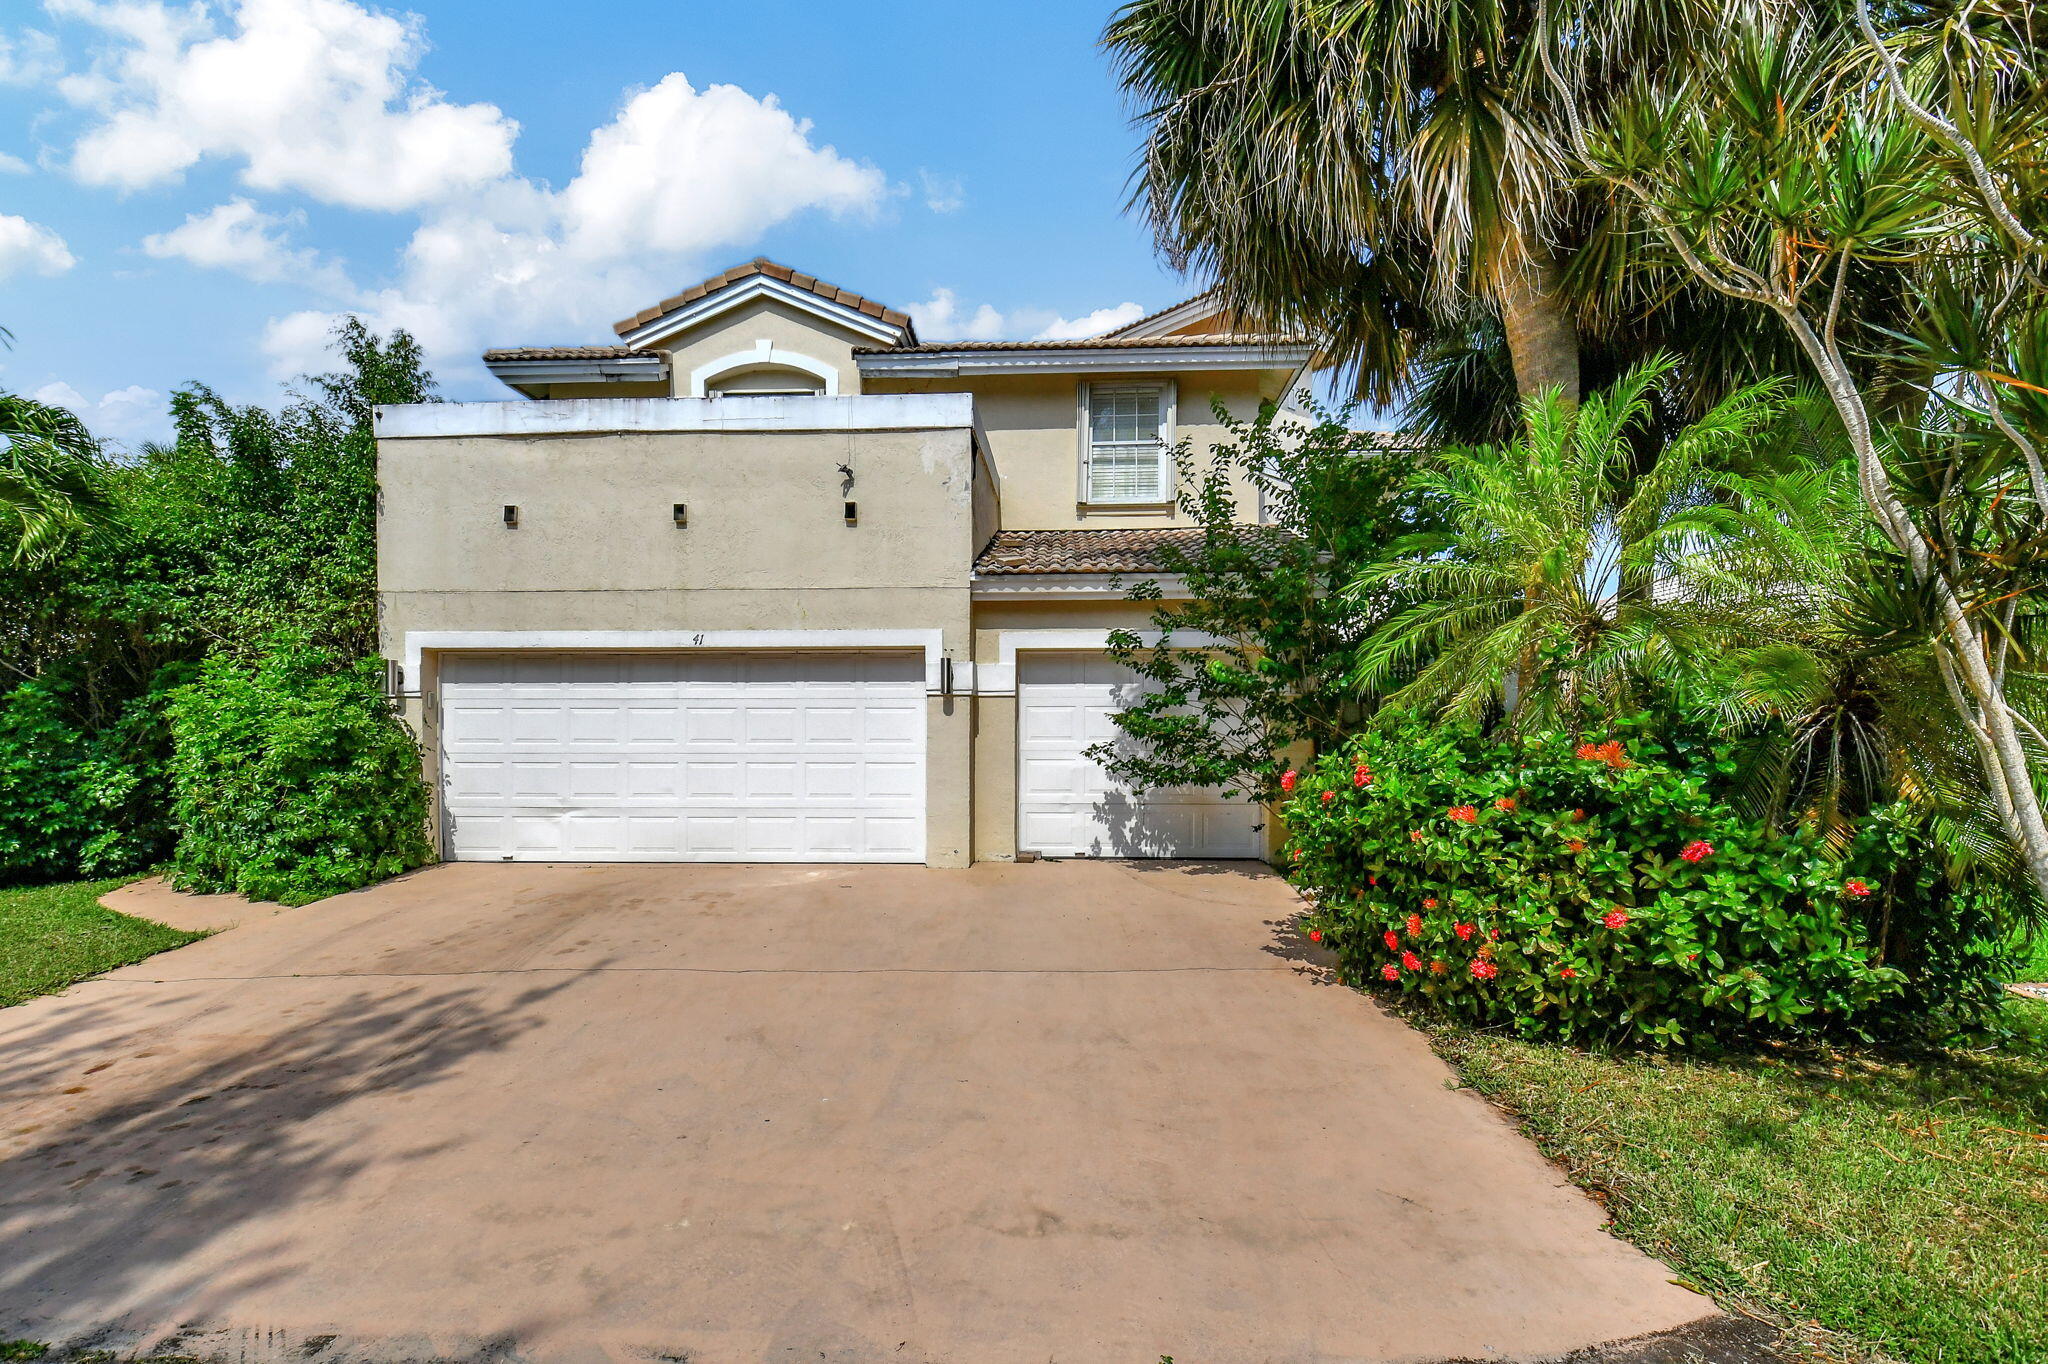 Property for Sale at 41 Citrus Park Drive, Boynton Beach, Palm Beach County, Florida - Bedrooms: 5 
Bathrooms: 3  - $575,000